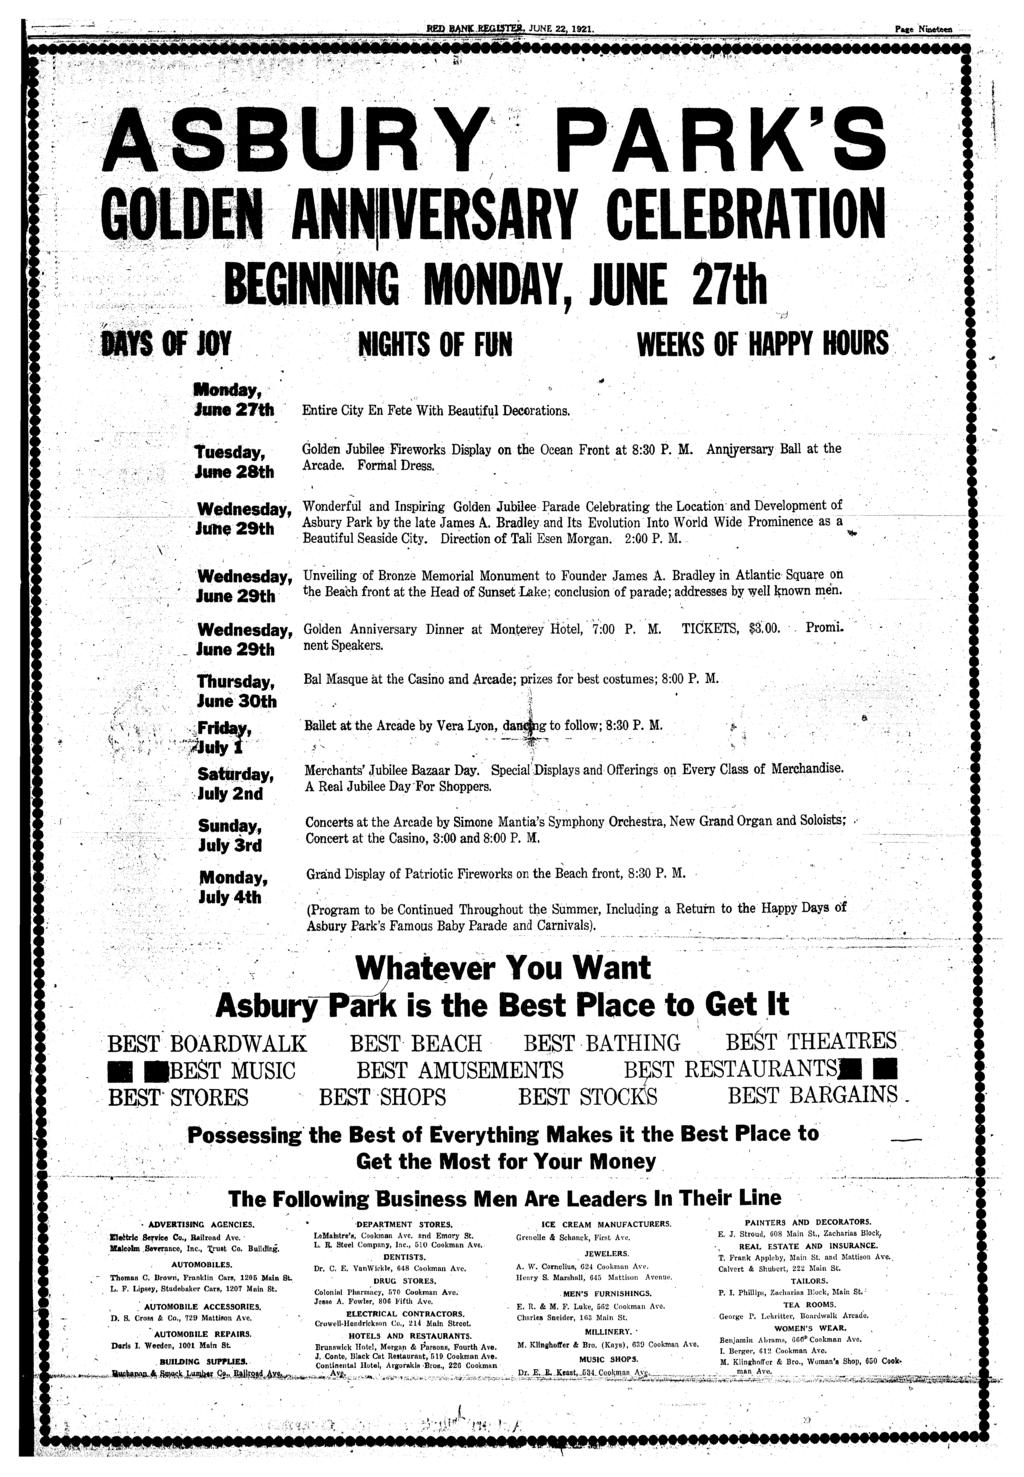 RED BANK JUNE 22, 1921. Page Nneeen # # ASBURY PARKS CELEBRATON JUNE 27h DAYS OF JOY NGHTS OF FUN WEEKS OF HAPPY HOURS Monday, June 27h Enre Cy En Fee Wh Beauful Decoraons.